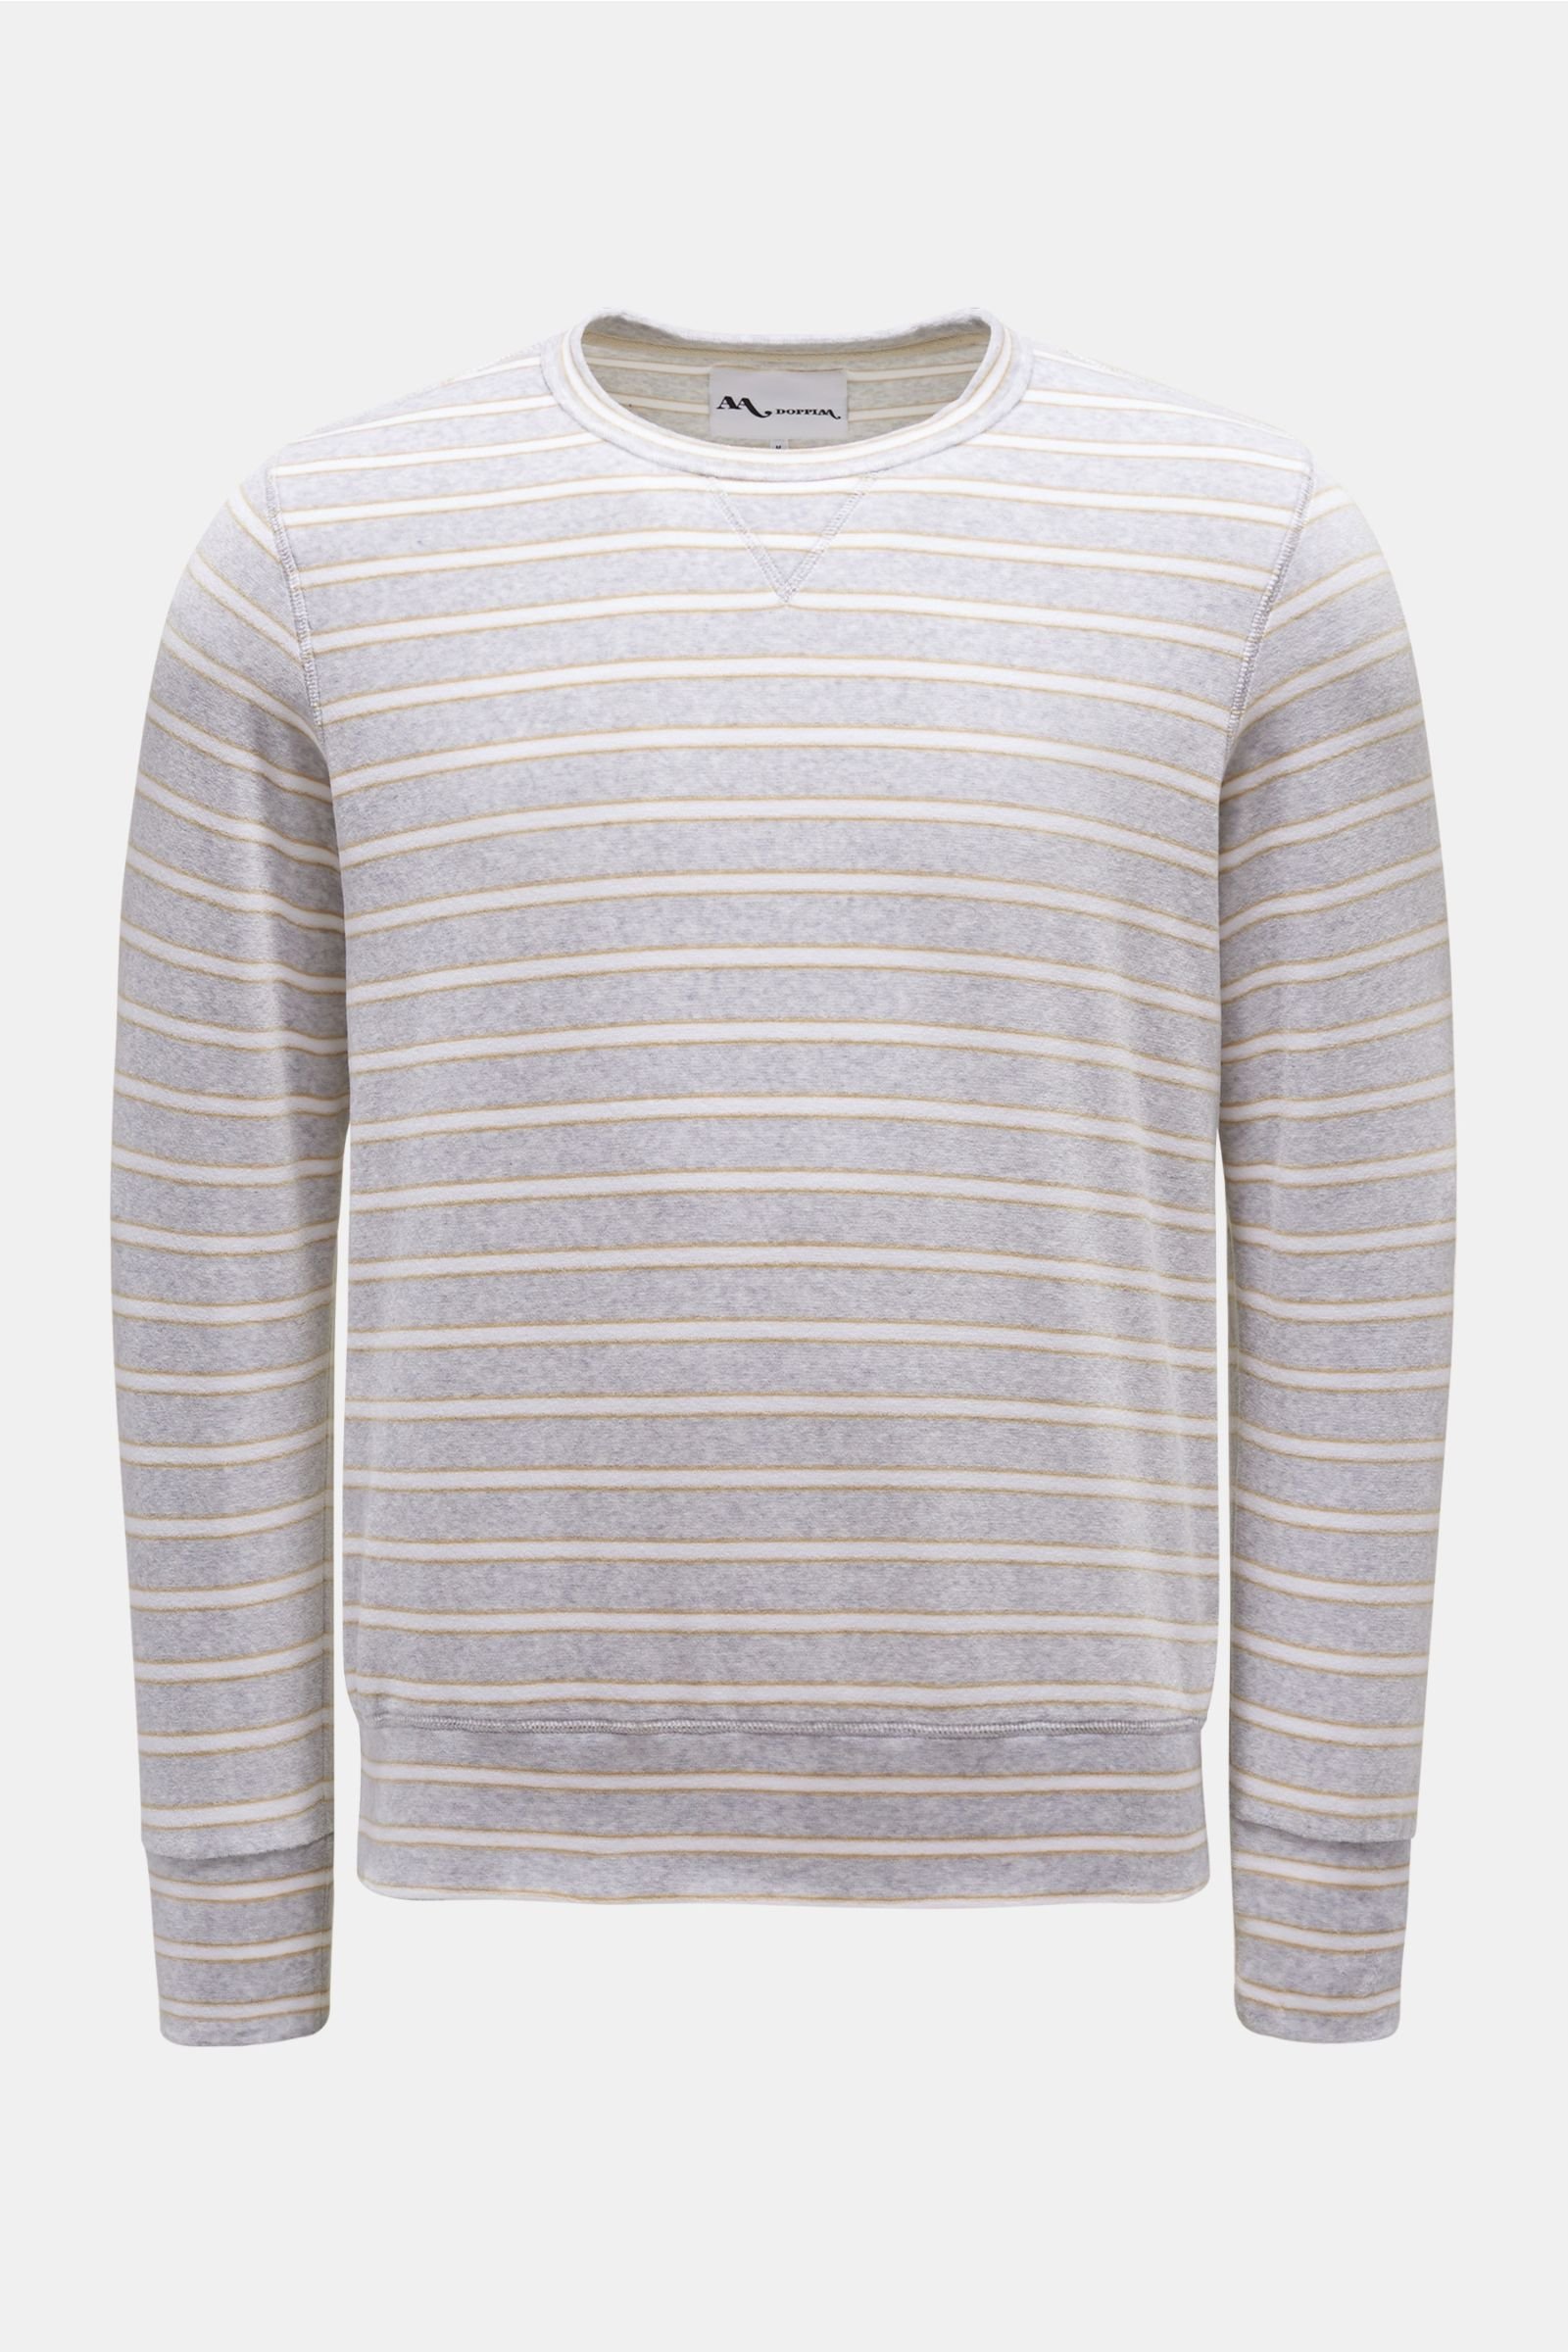 Plush fabric crew neck sweatshirt 'Aamerican' light grey/beige striped